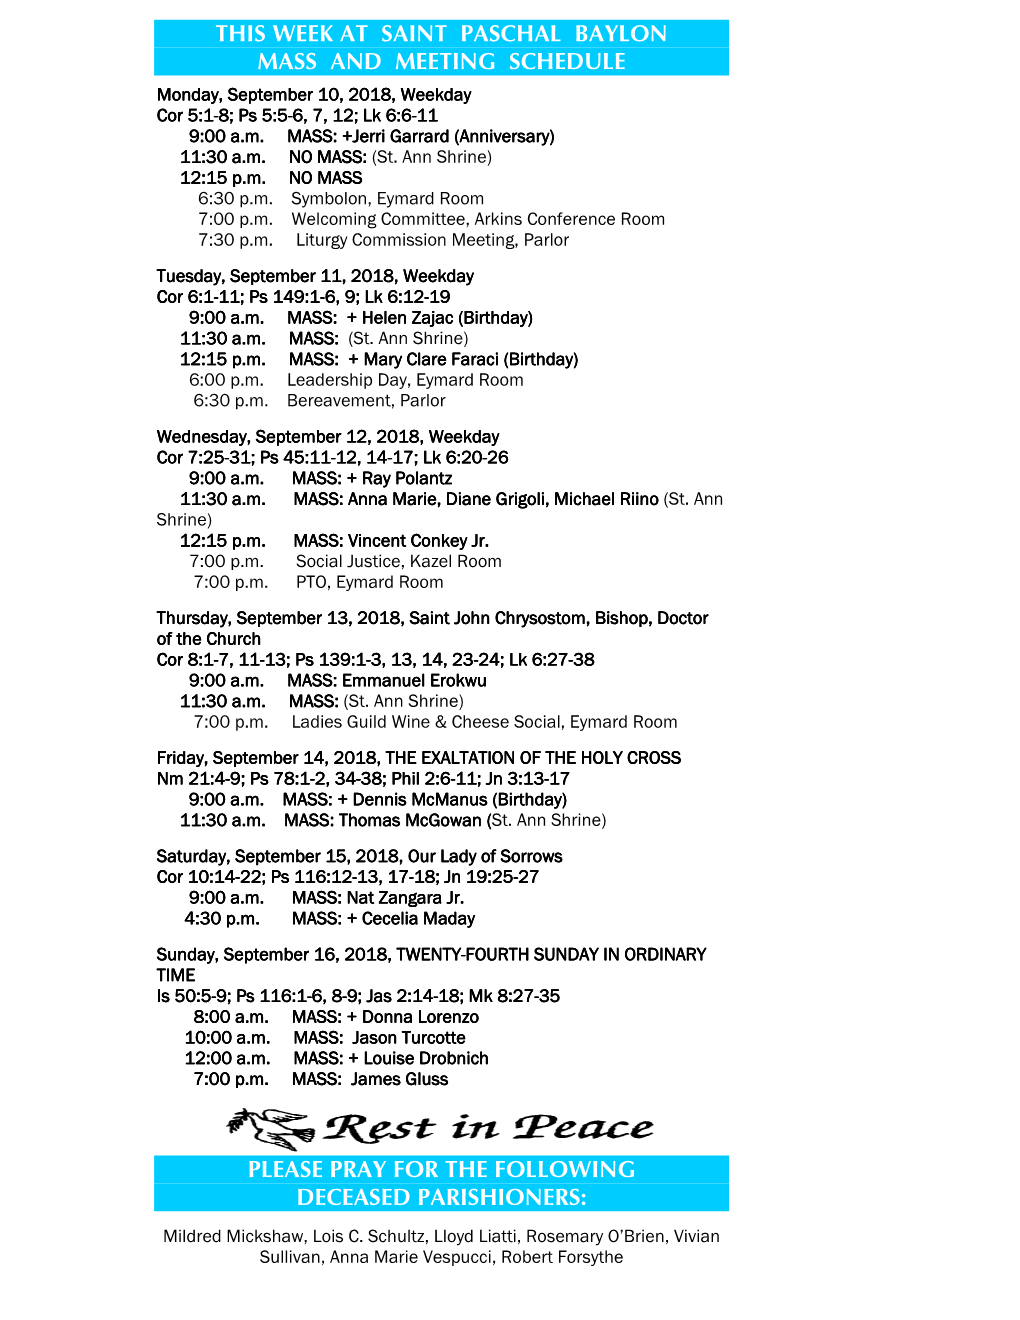 This Week at Saint Paschal Baylon Mass and Meeting Schedule